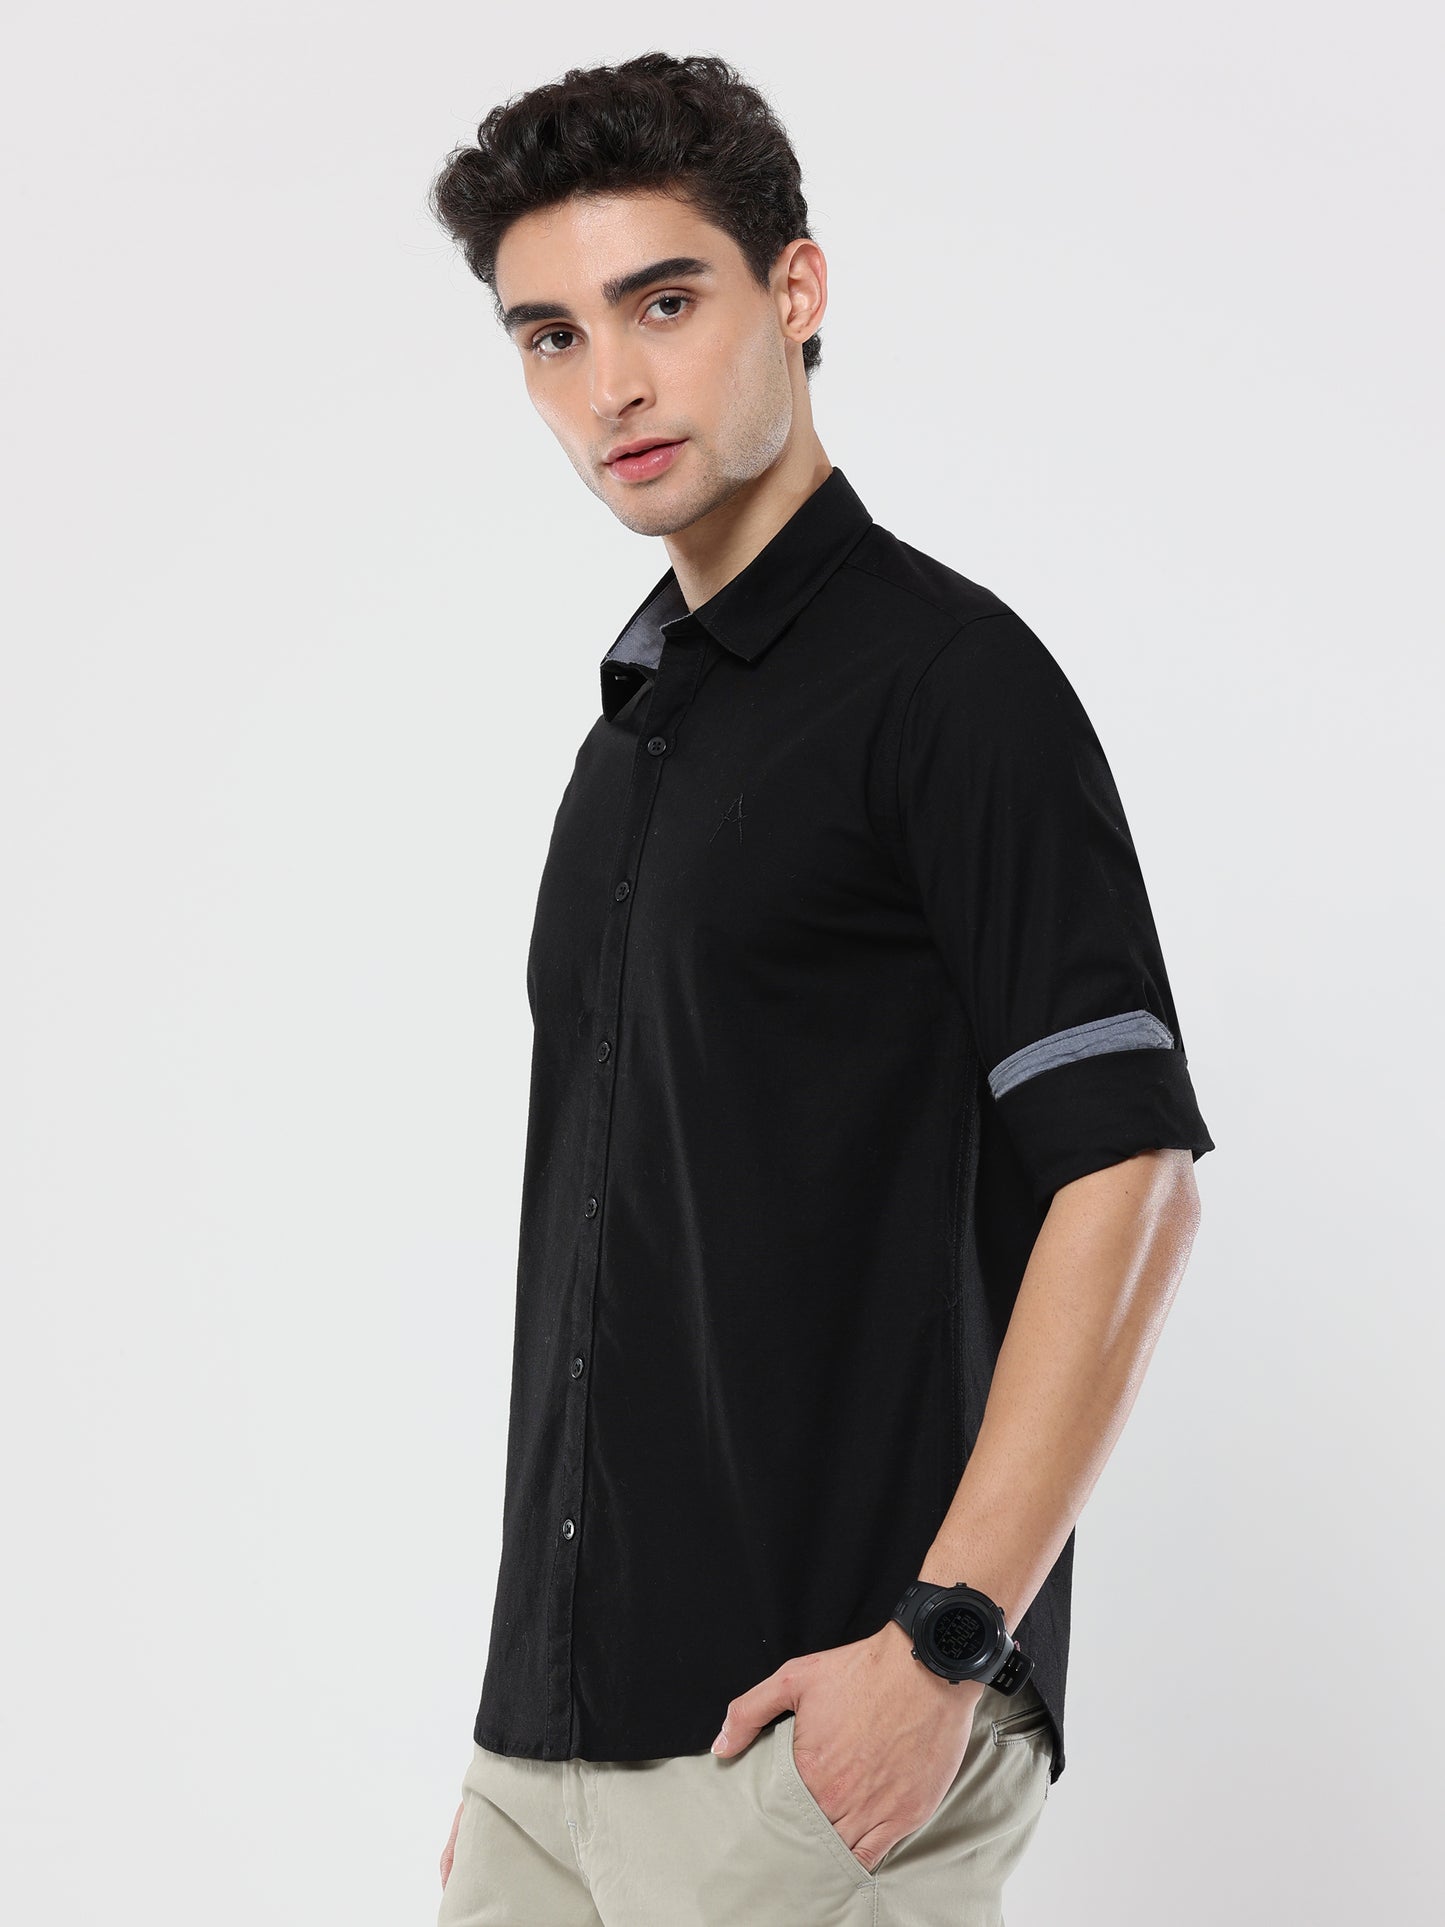 Black Plain Premium Cotton Oxford Shirt For Men